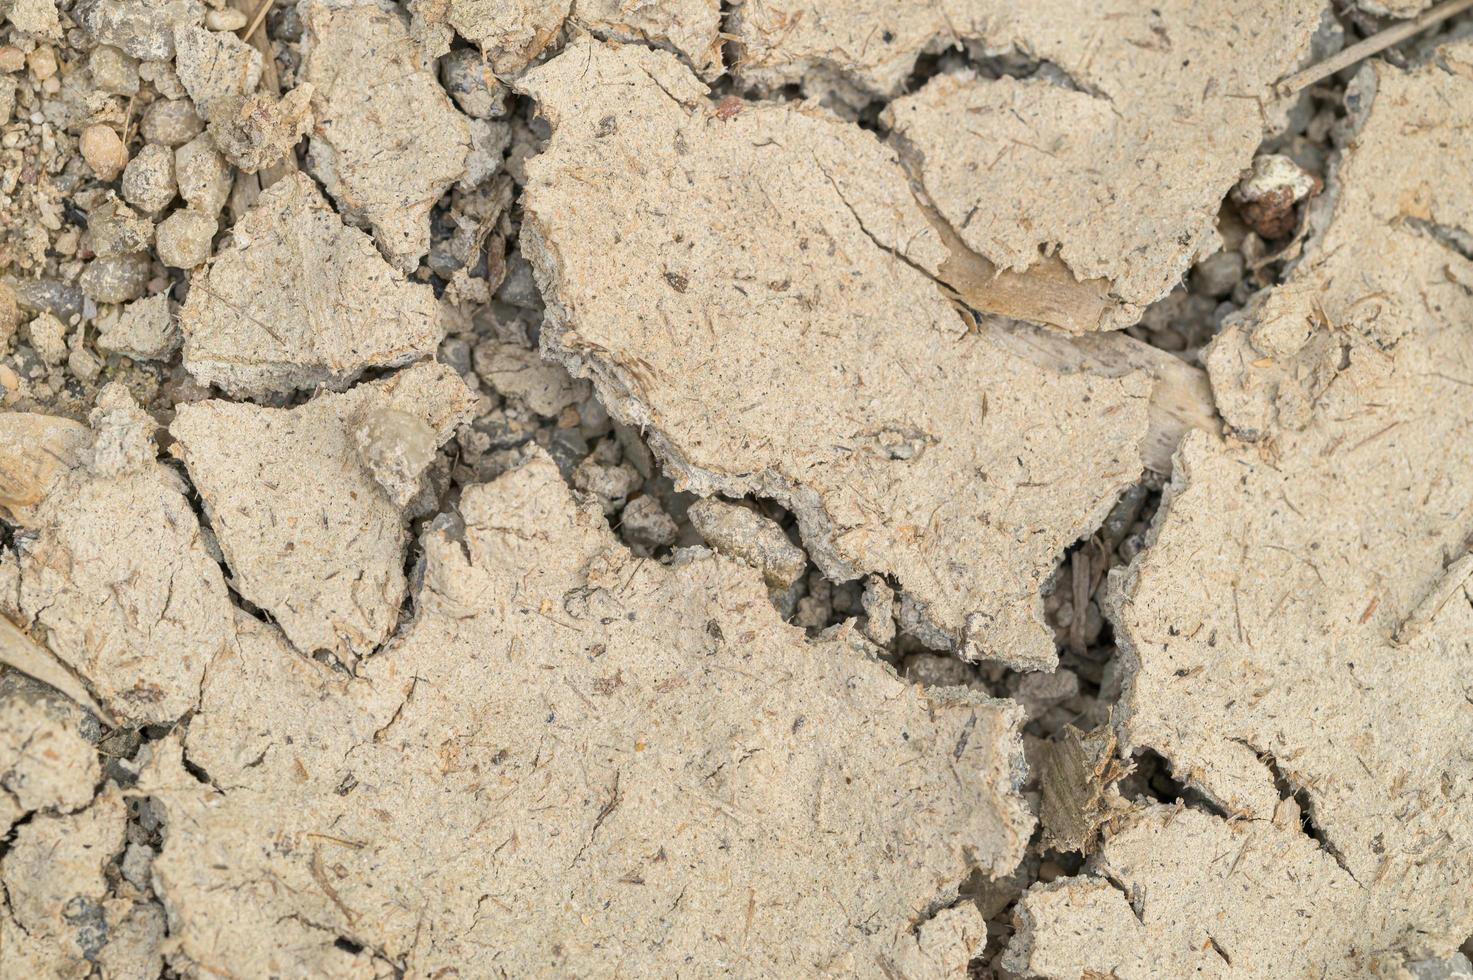 Dry soil close-up photo